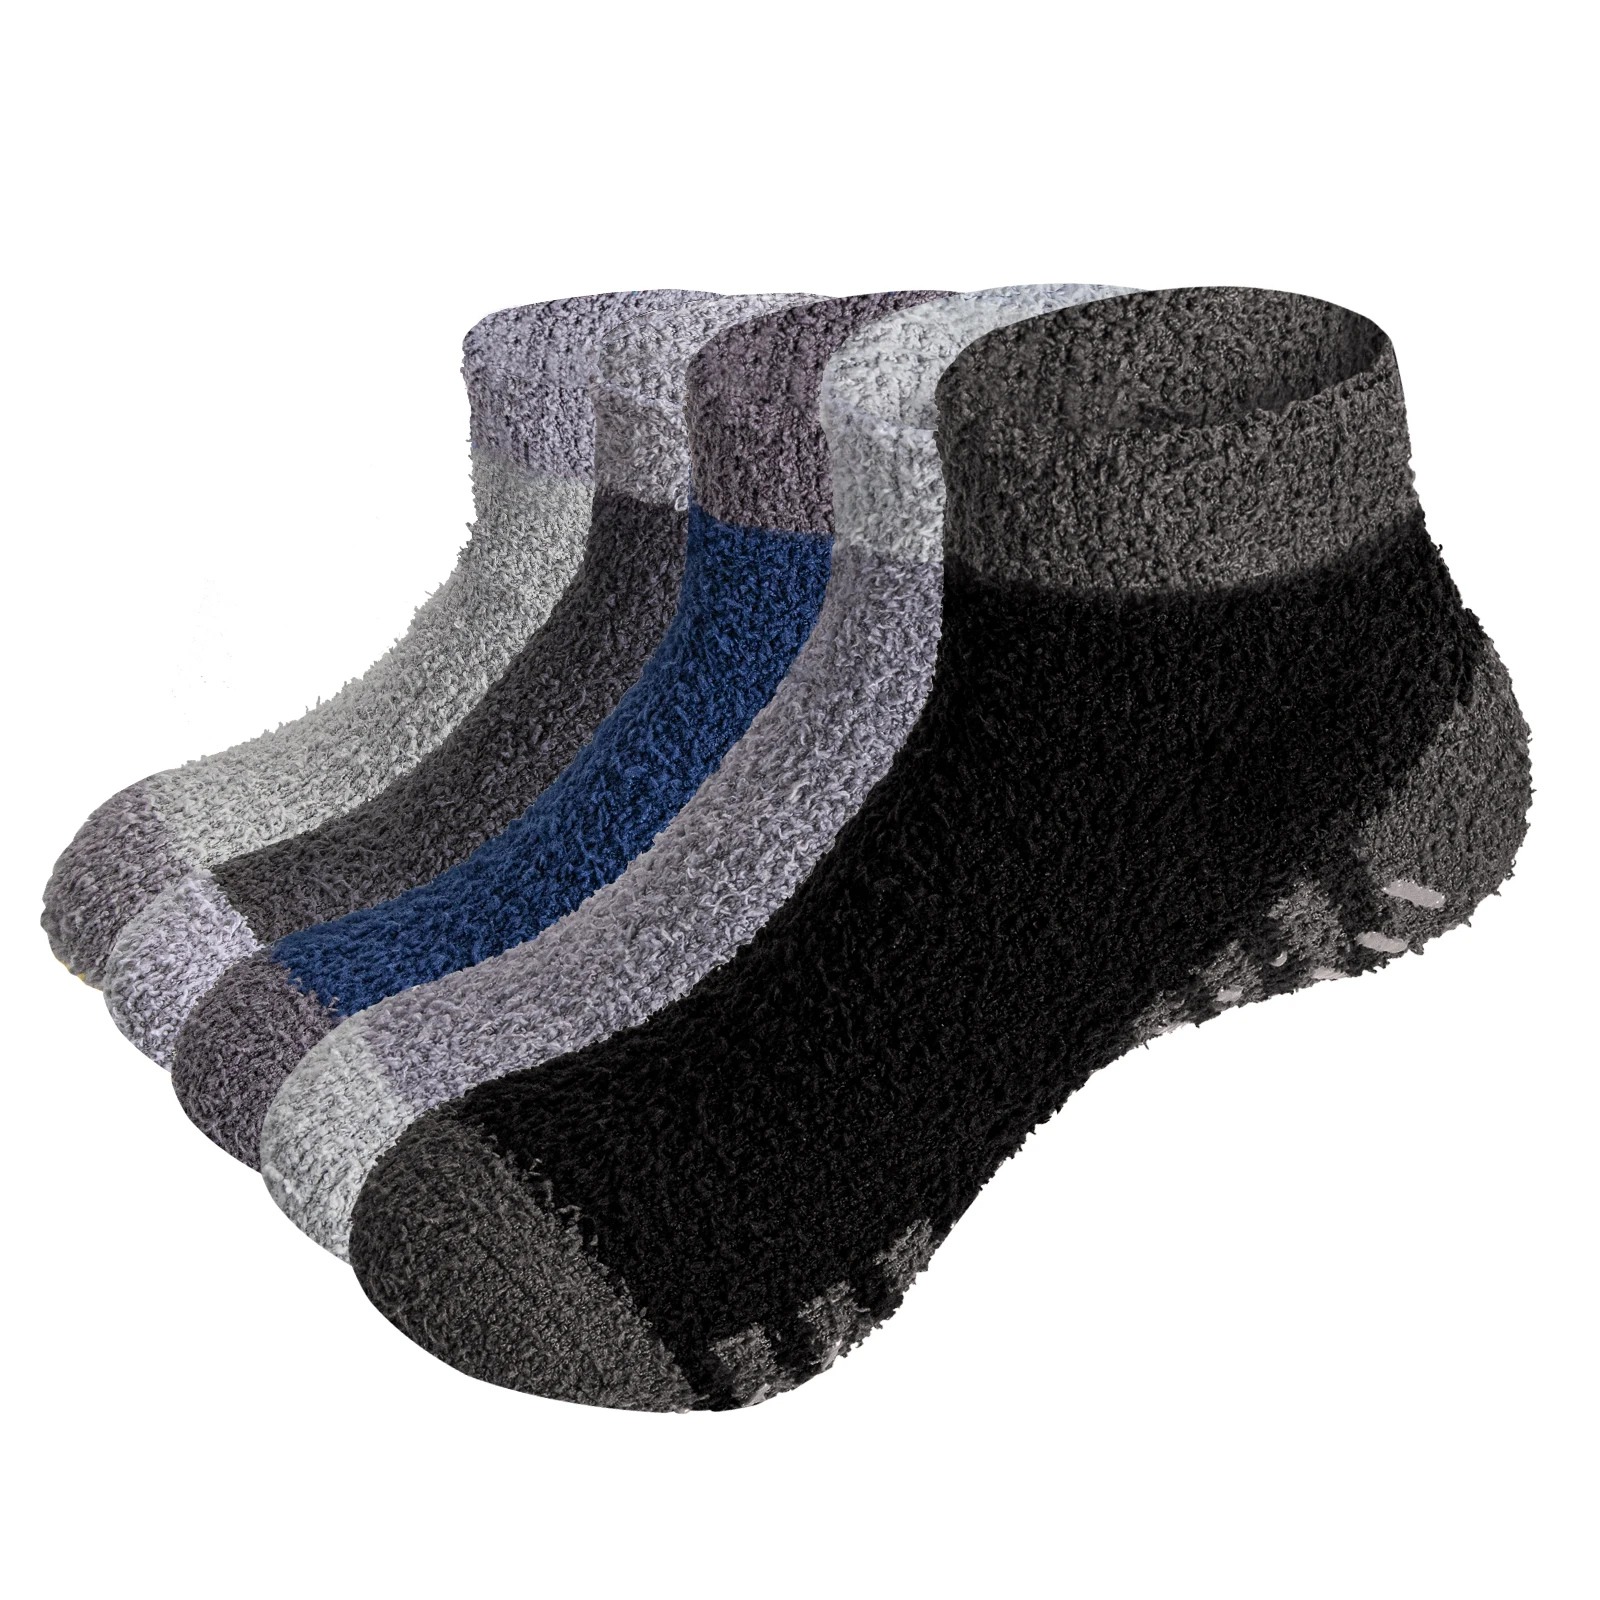 YUEDGE Mens Fuzzy Socks,Winter Cozy Fluffy Sleeping Socks Men Hospital Socks,Fuzzy Warm Slipper Socks With Grippers For Men